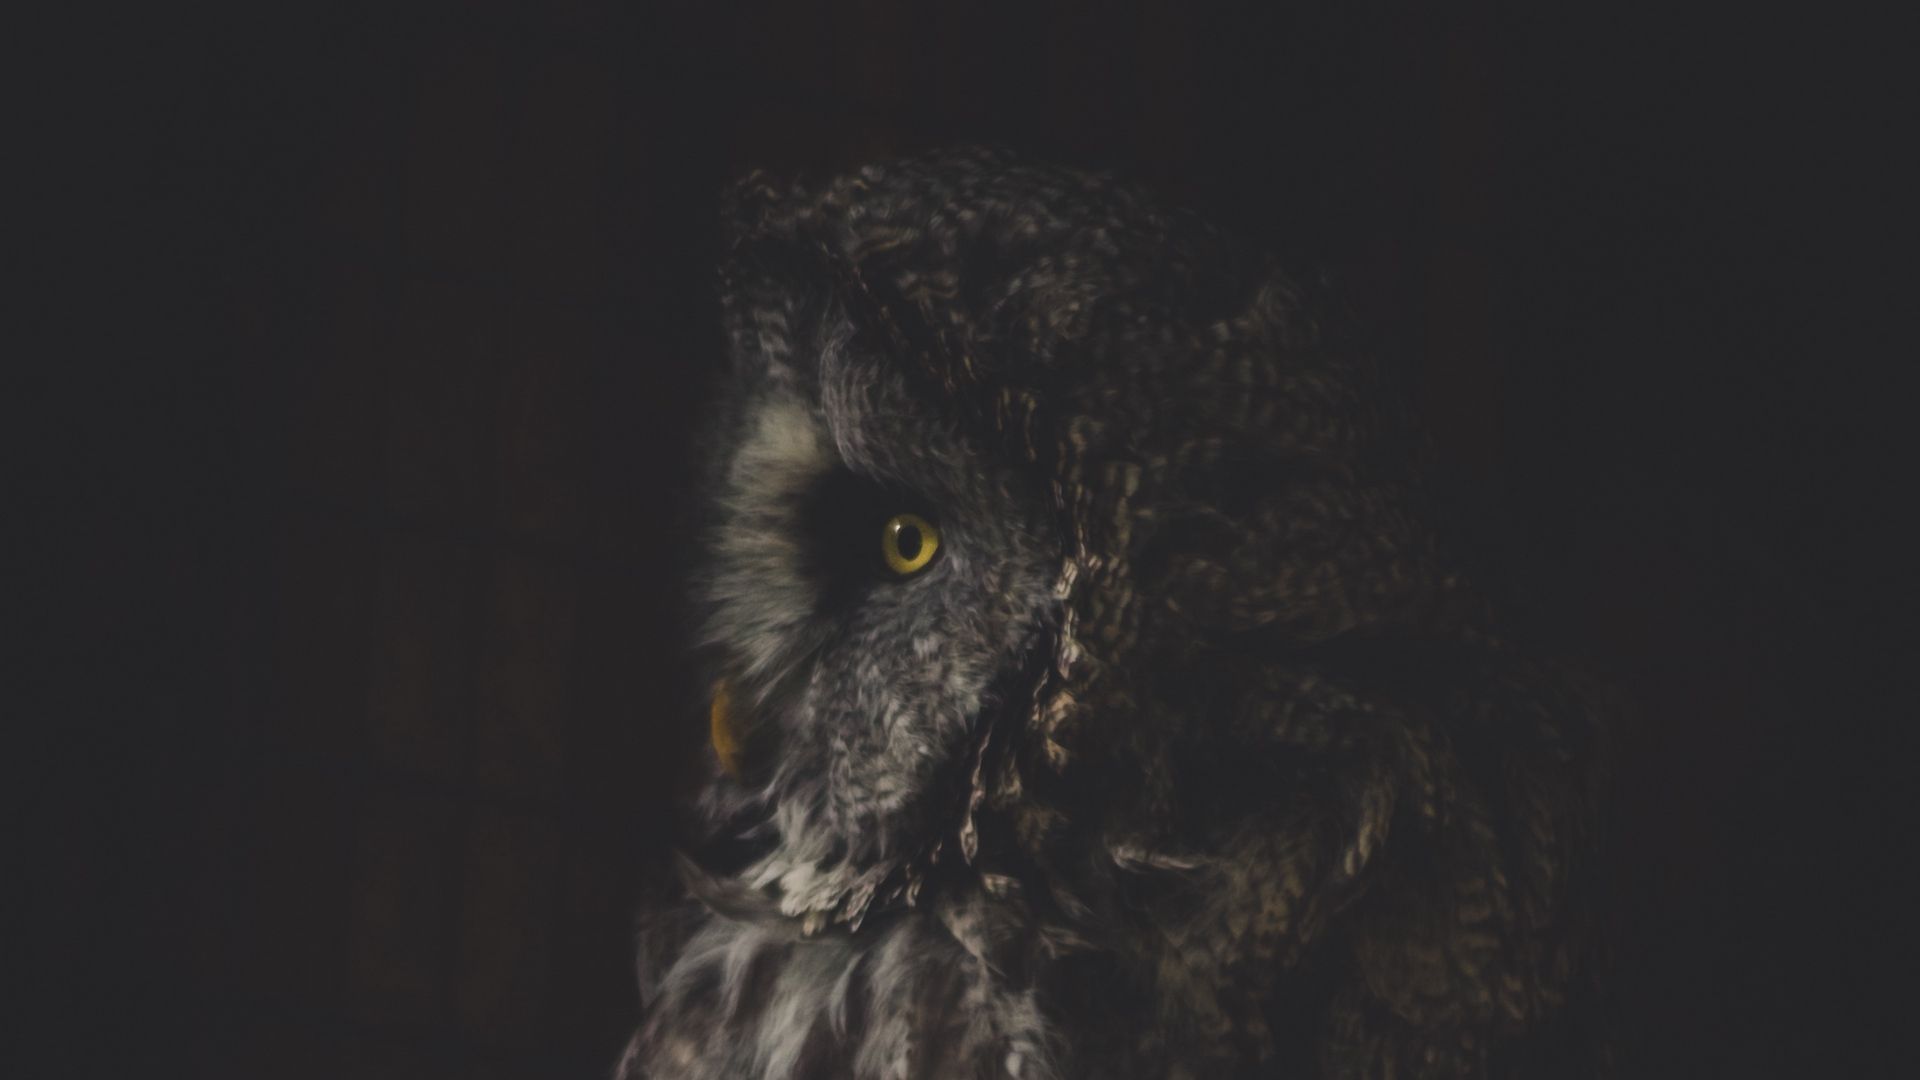 Wallpaper Owl